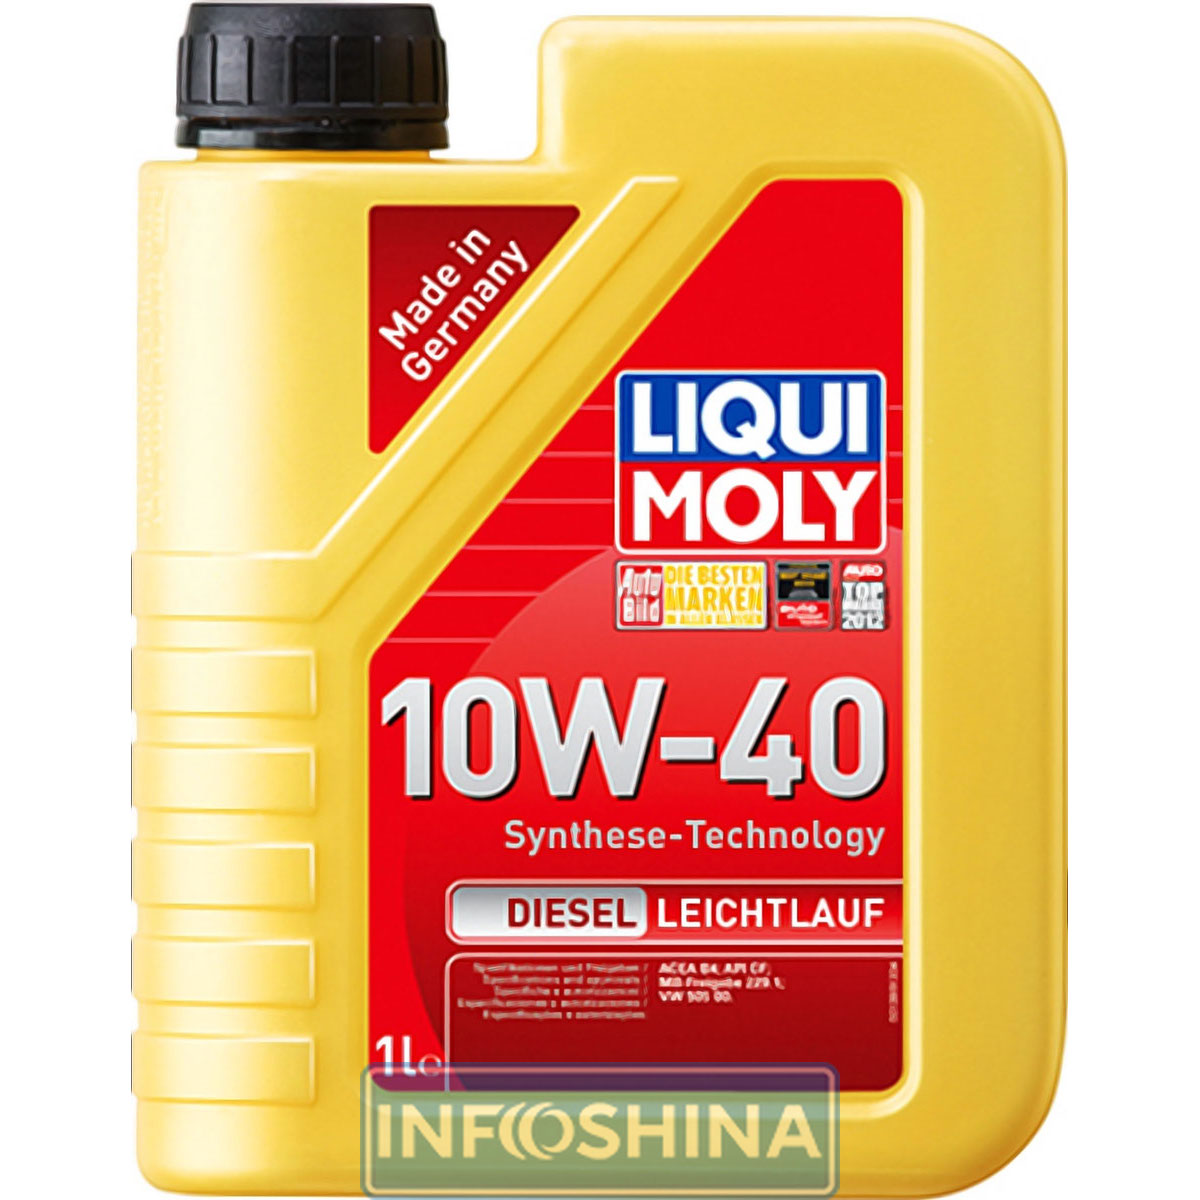 Купить масло Liqui Moly Diesel Leichtlauf 10W-40 (1л)